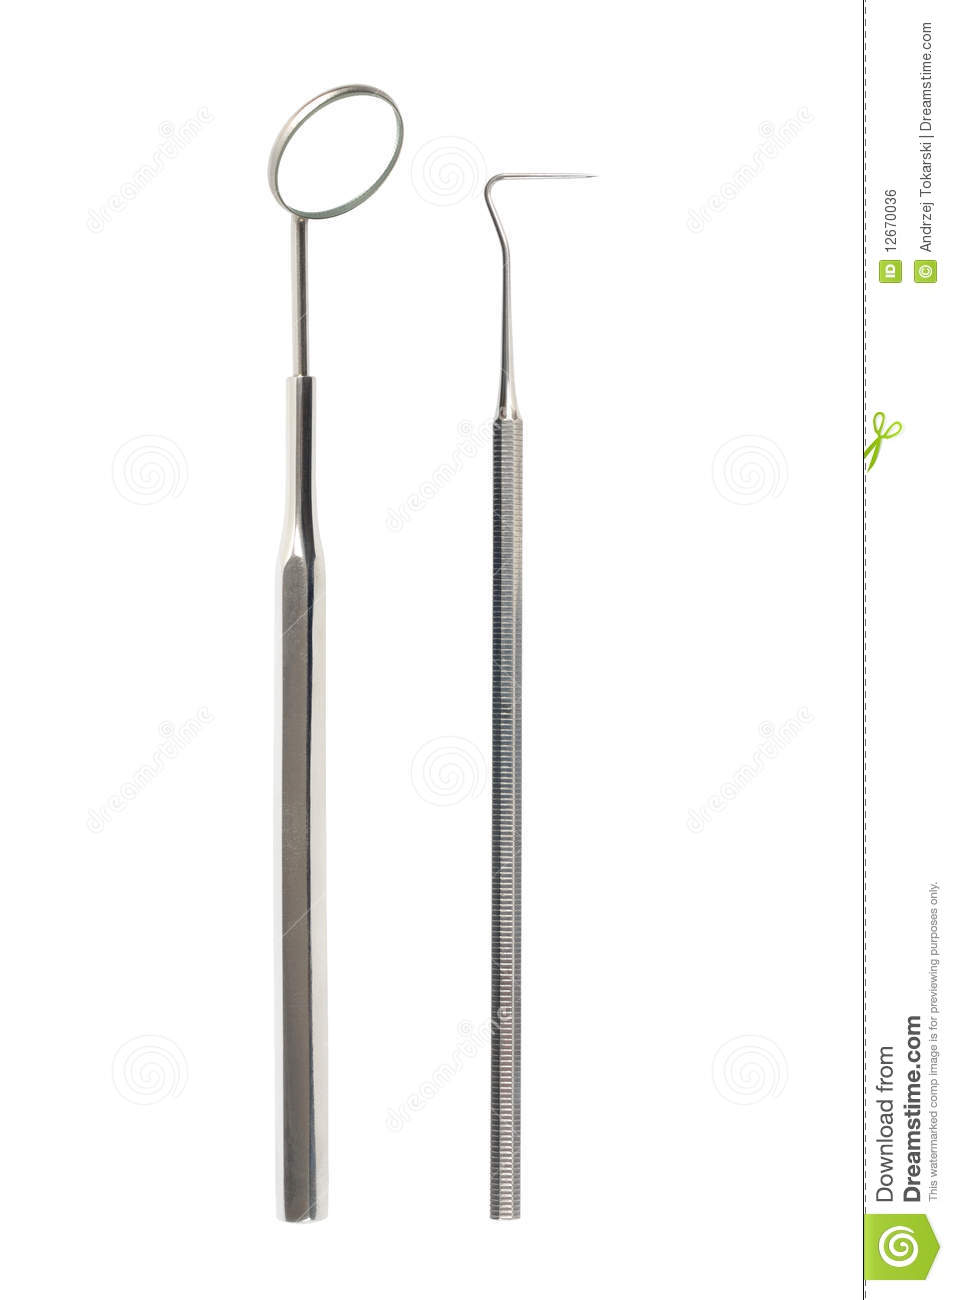 Dental Tools Royalty Free Stock Image   Image  12670036